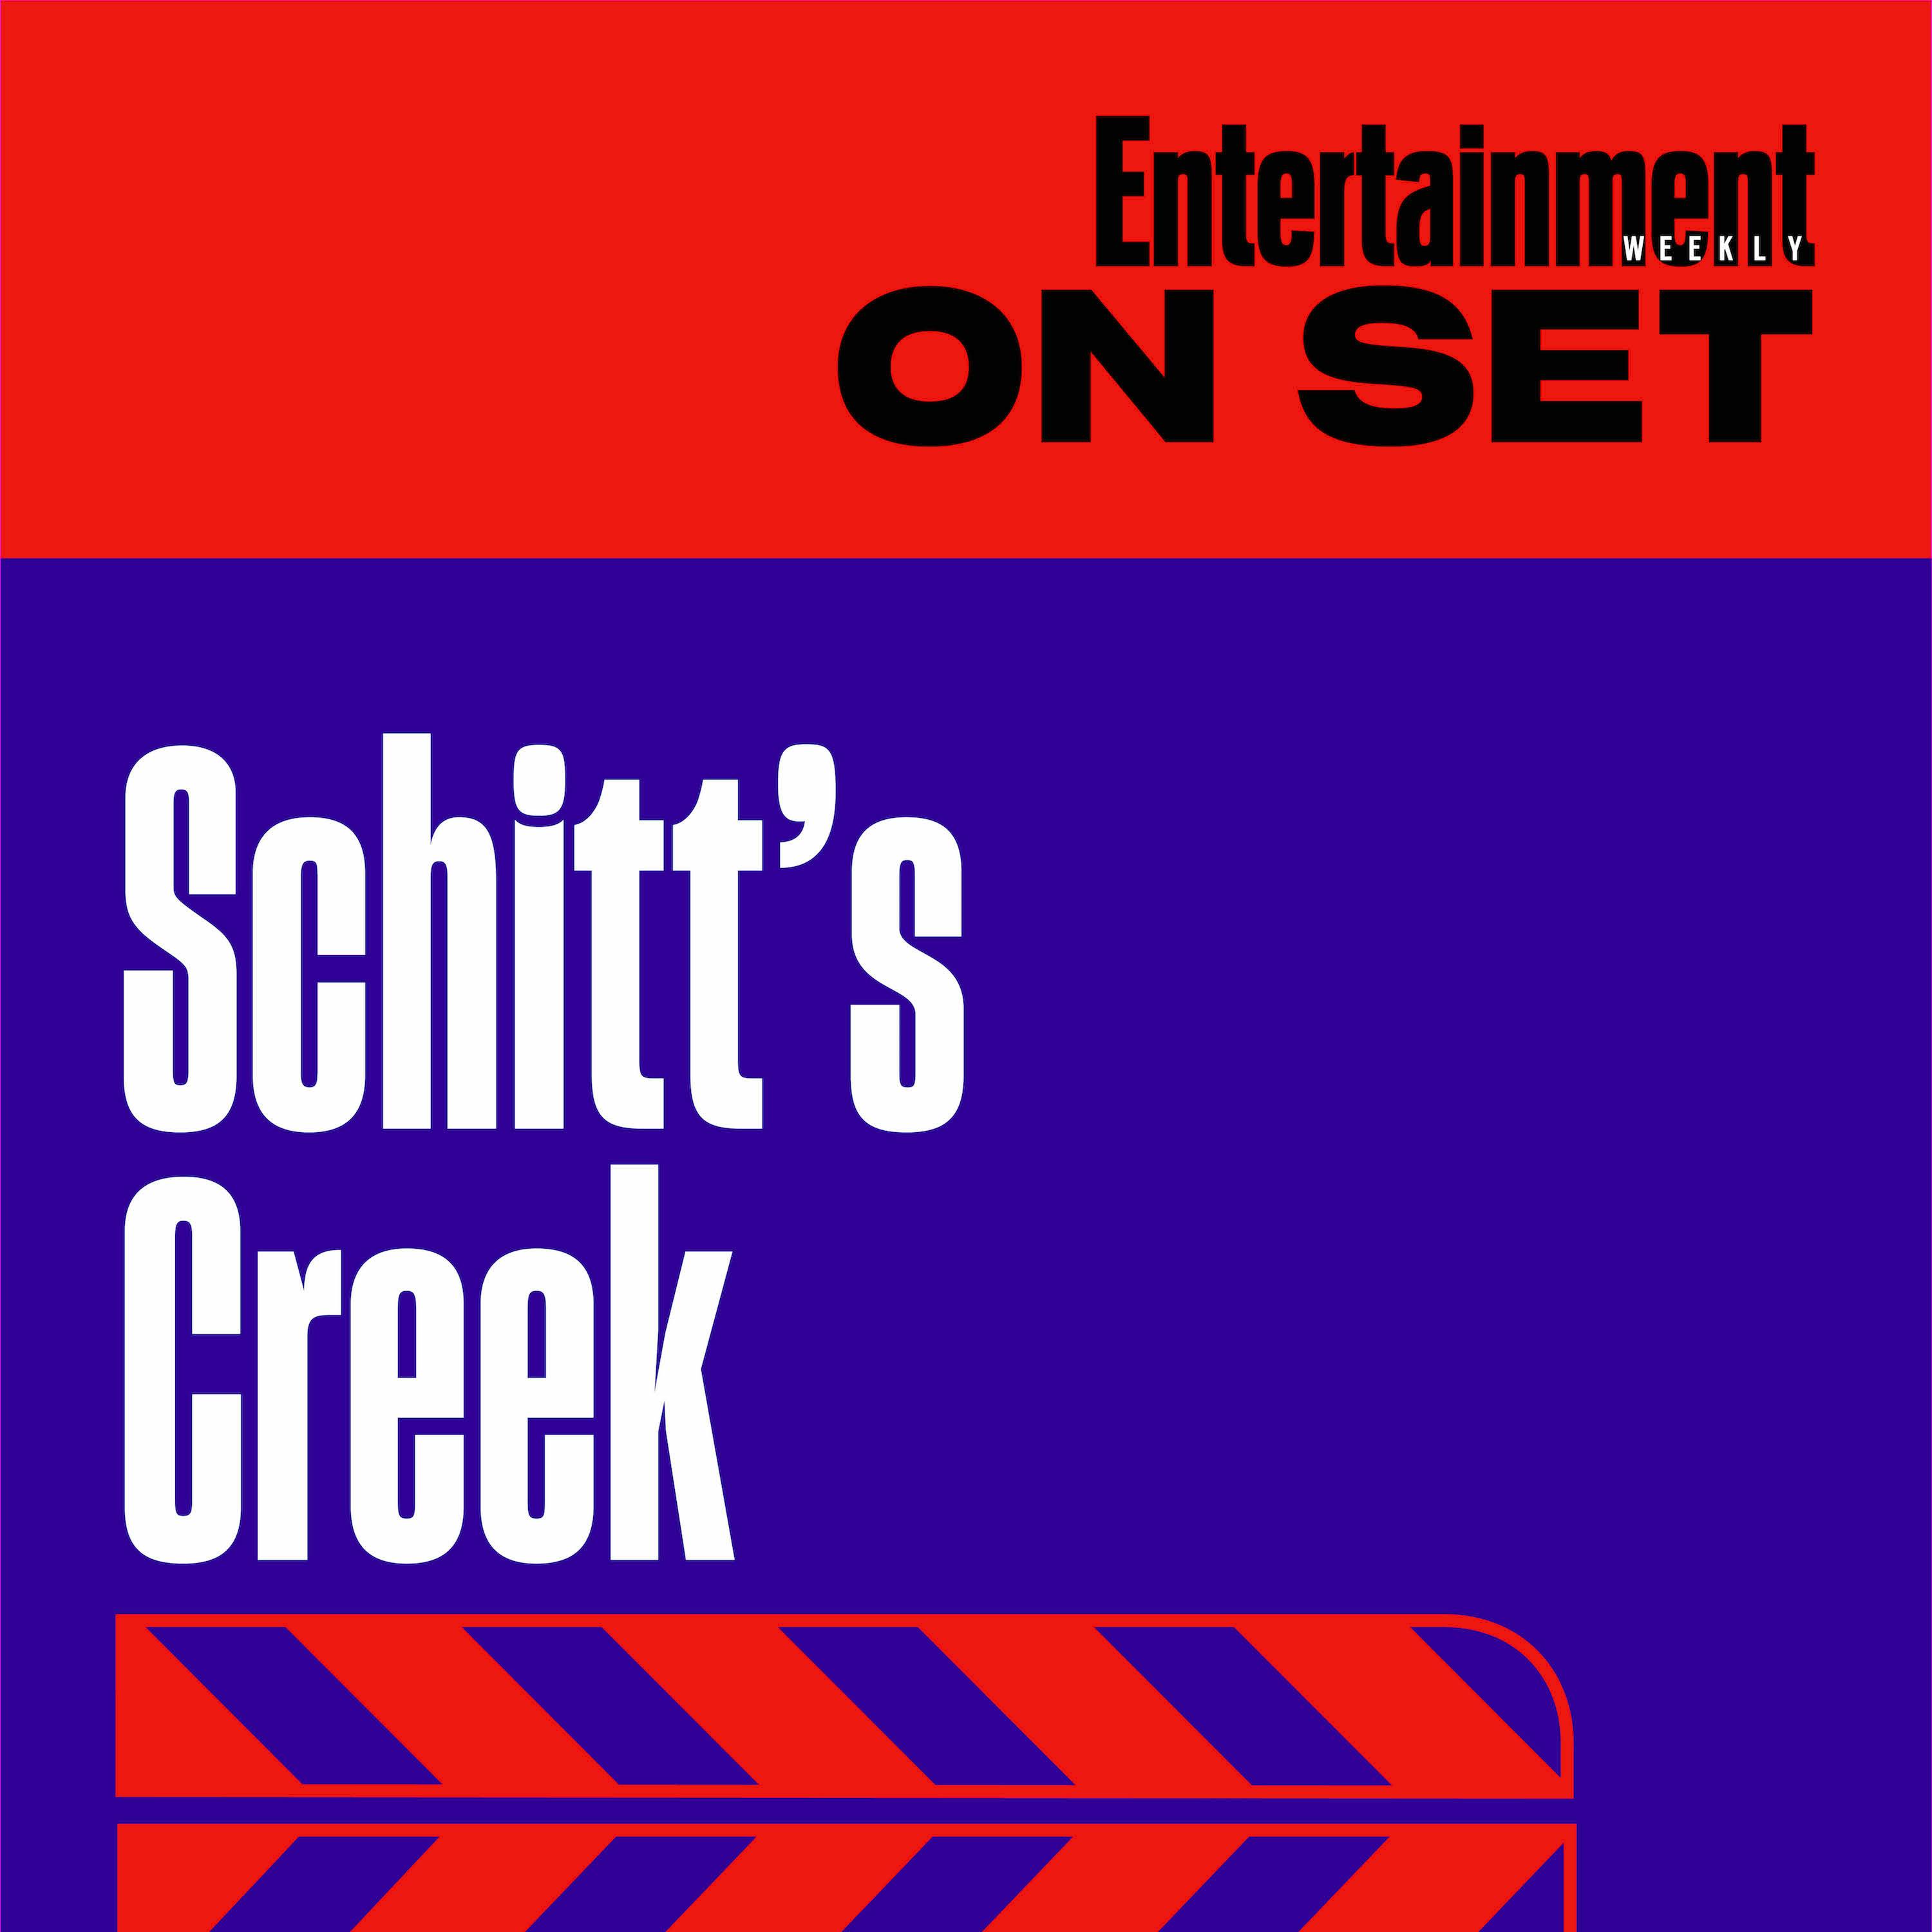 EW On Set: Schitt's Creek Episode 6.04 "Maid of Honour"